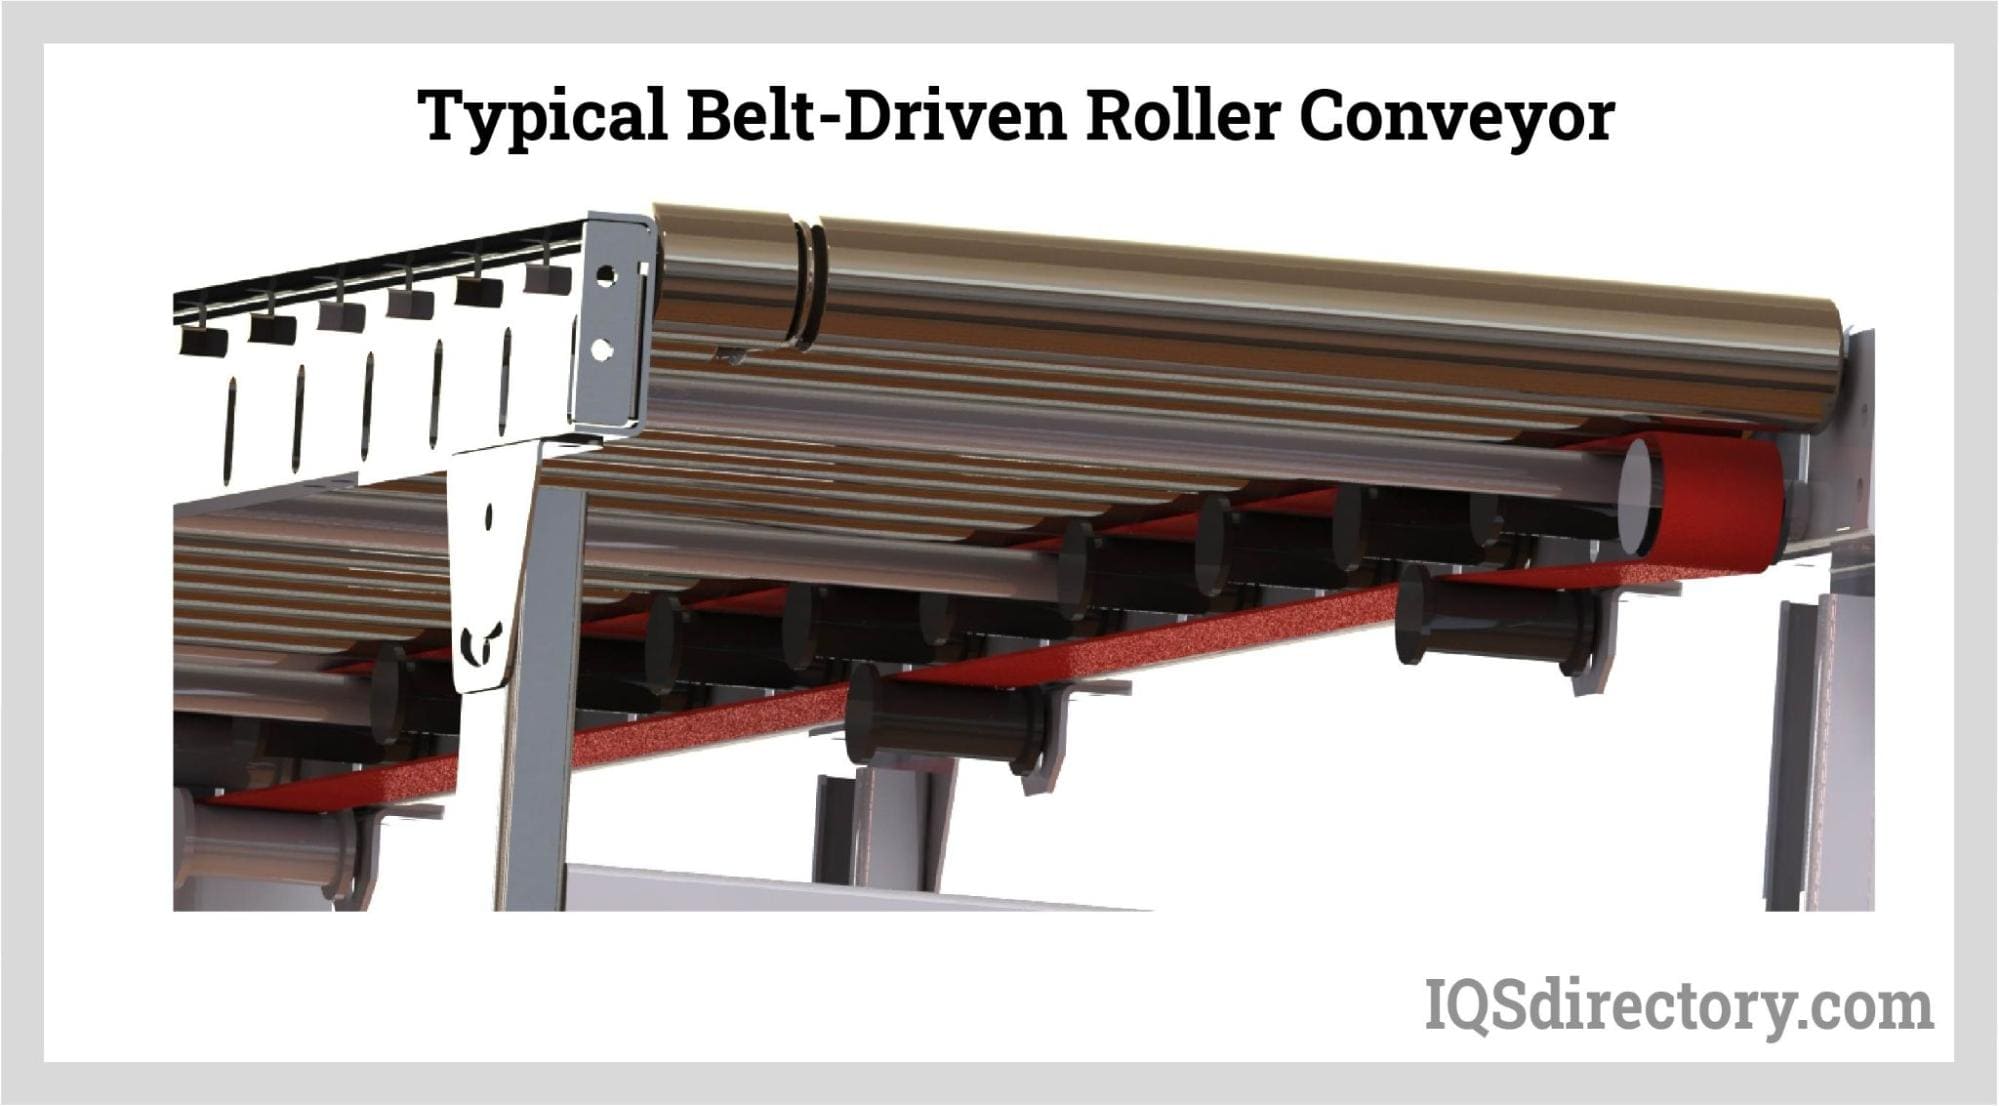 Typical Belt-driven Roller Conveyor